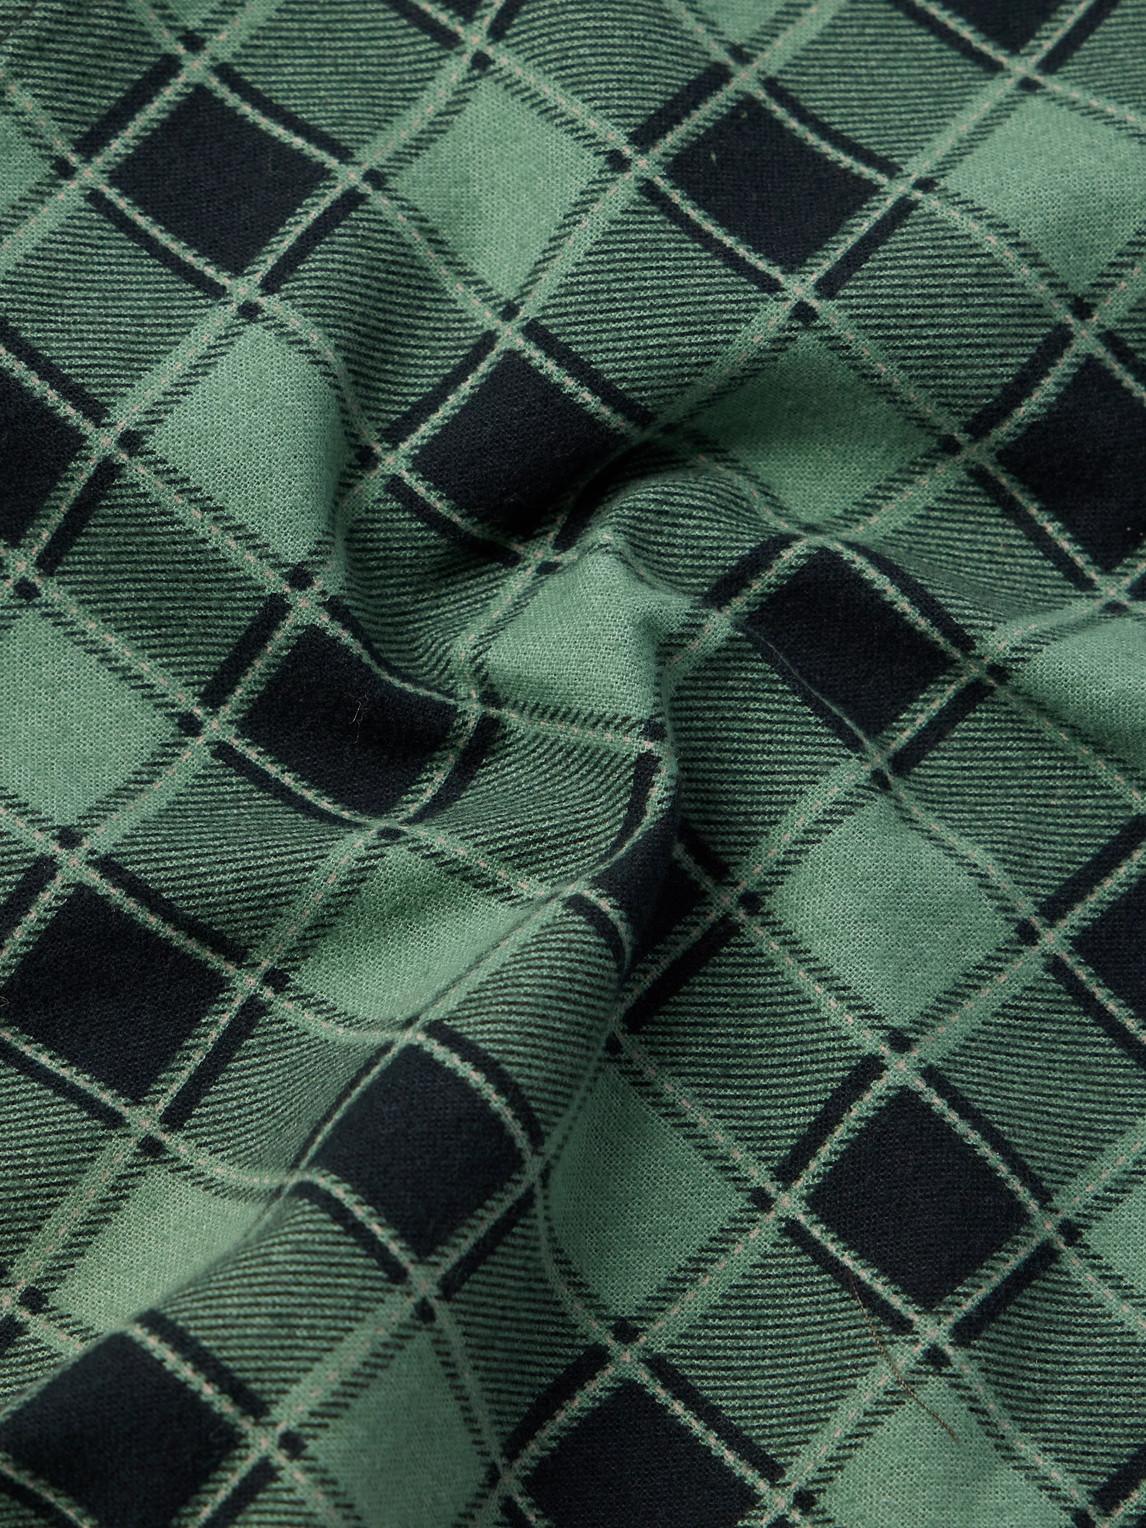 Shop Rrl Preston Checked Cotton Shirt In Green